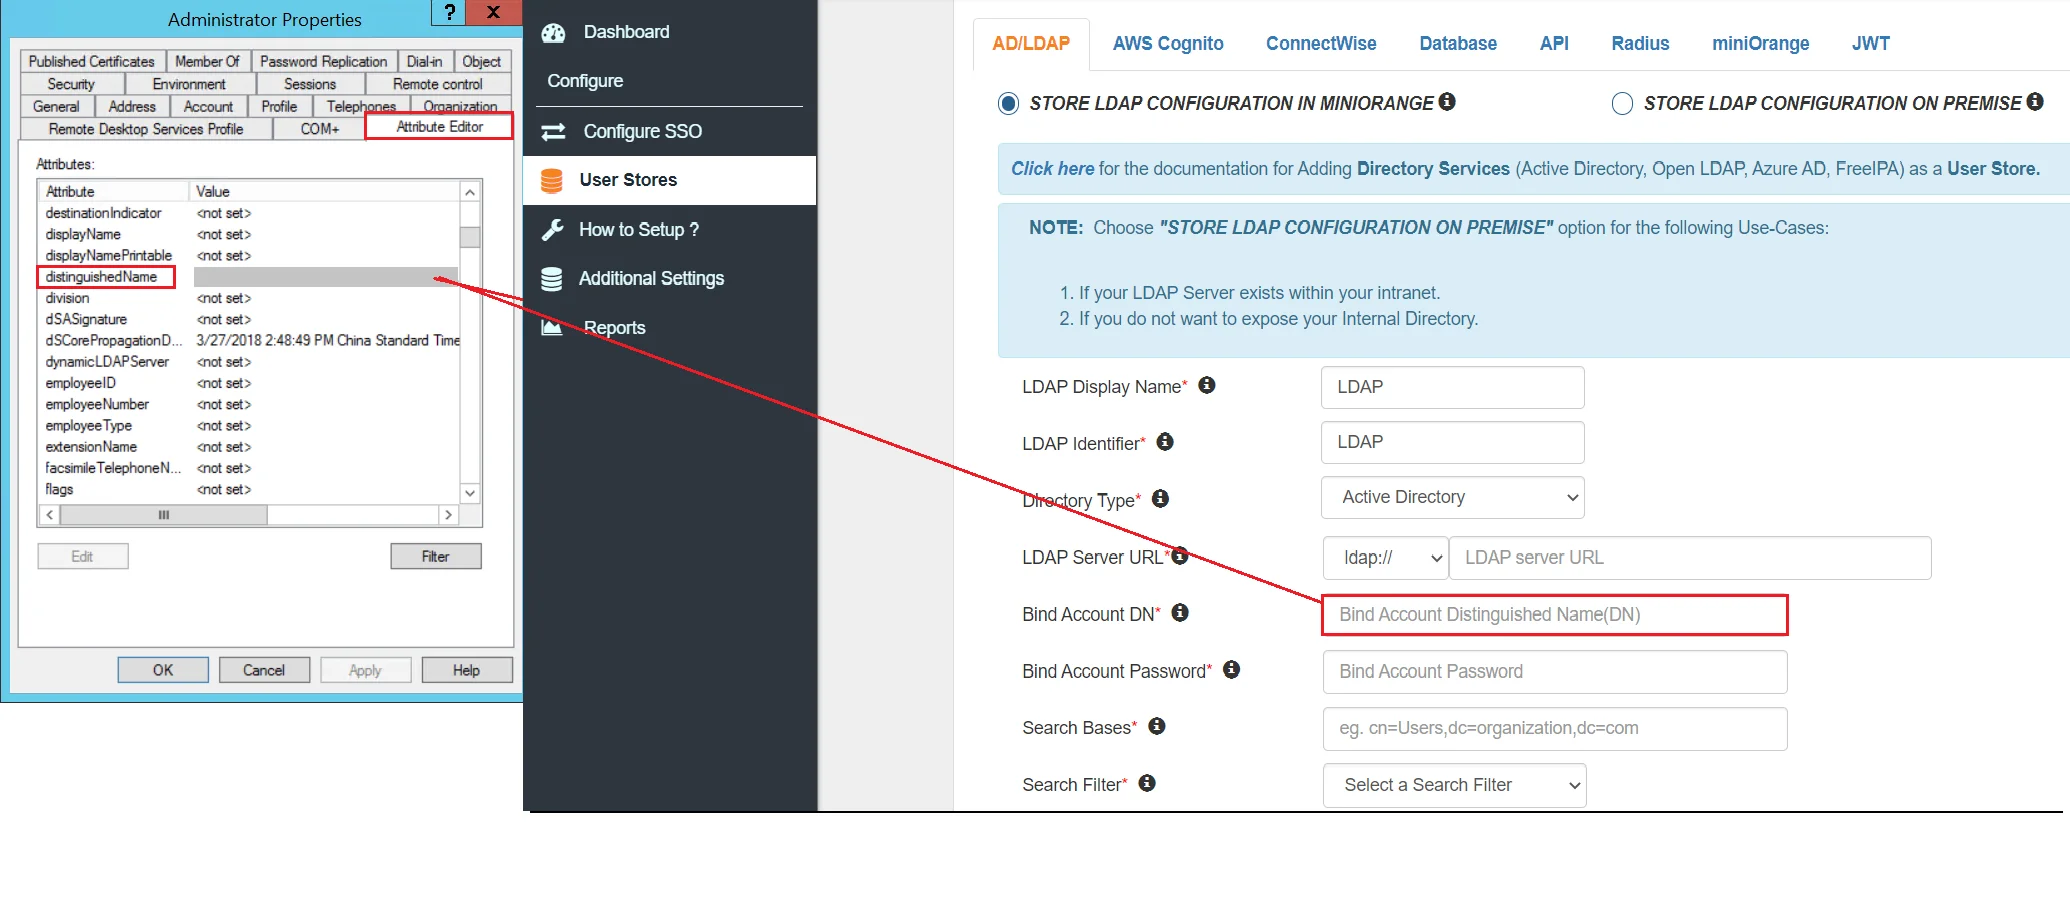 Shopify Active Directory (AD/LDAP) enter Bind Account DN